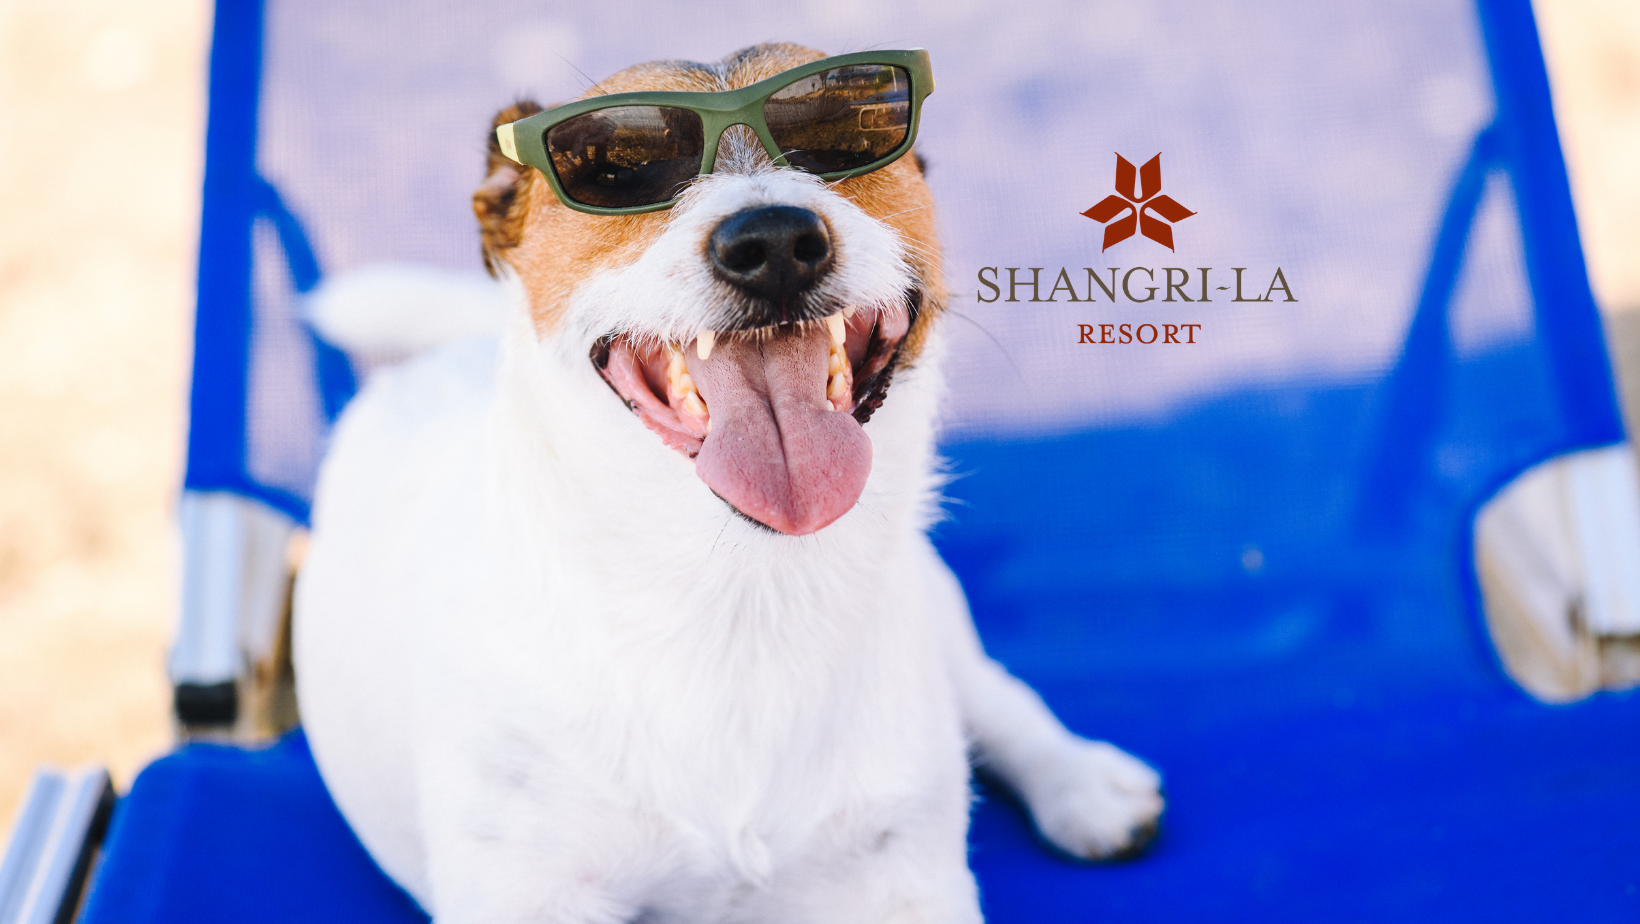 Shangri-La Resort is Pet Friendly